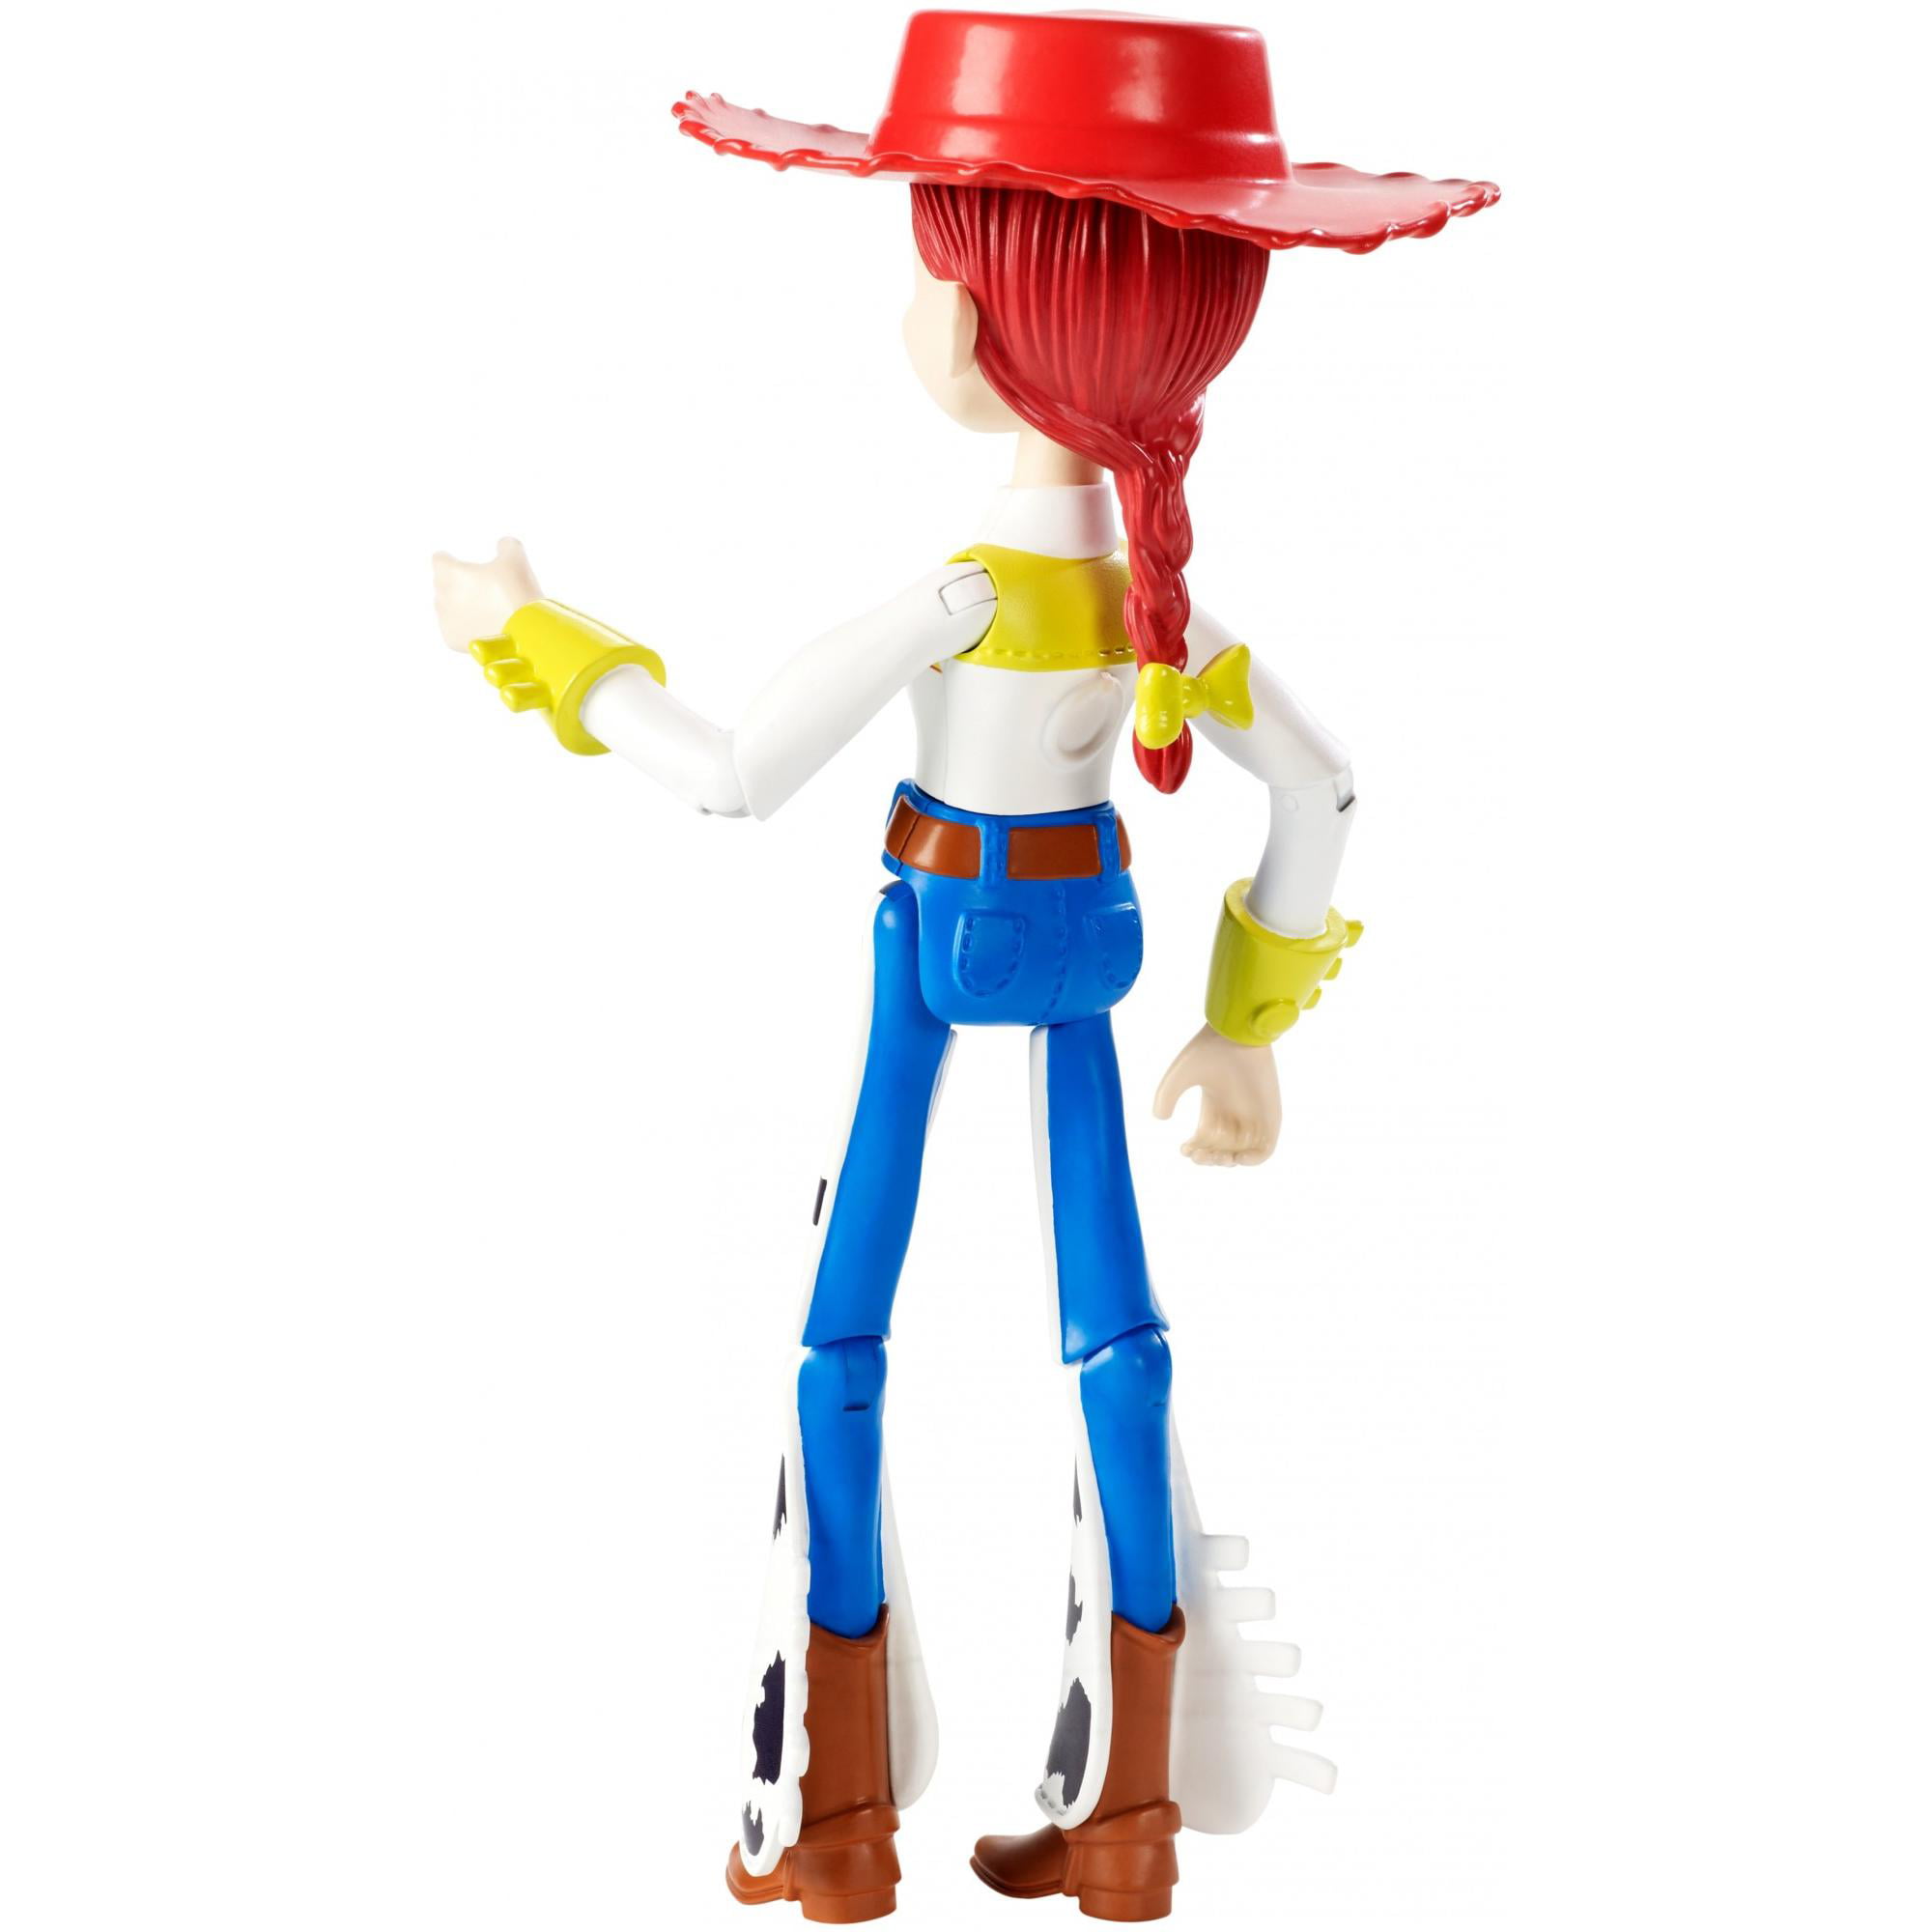 Disney/Pixar Toy Story 4 Jessie Figure, 8.8 In / 22.35 cm Tall 